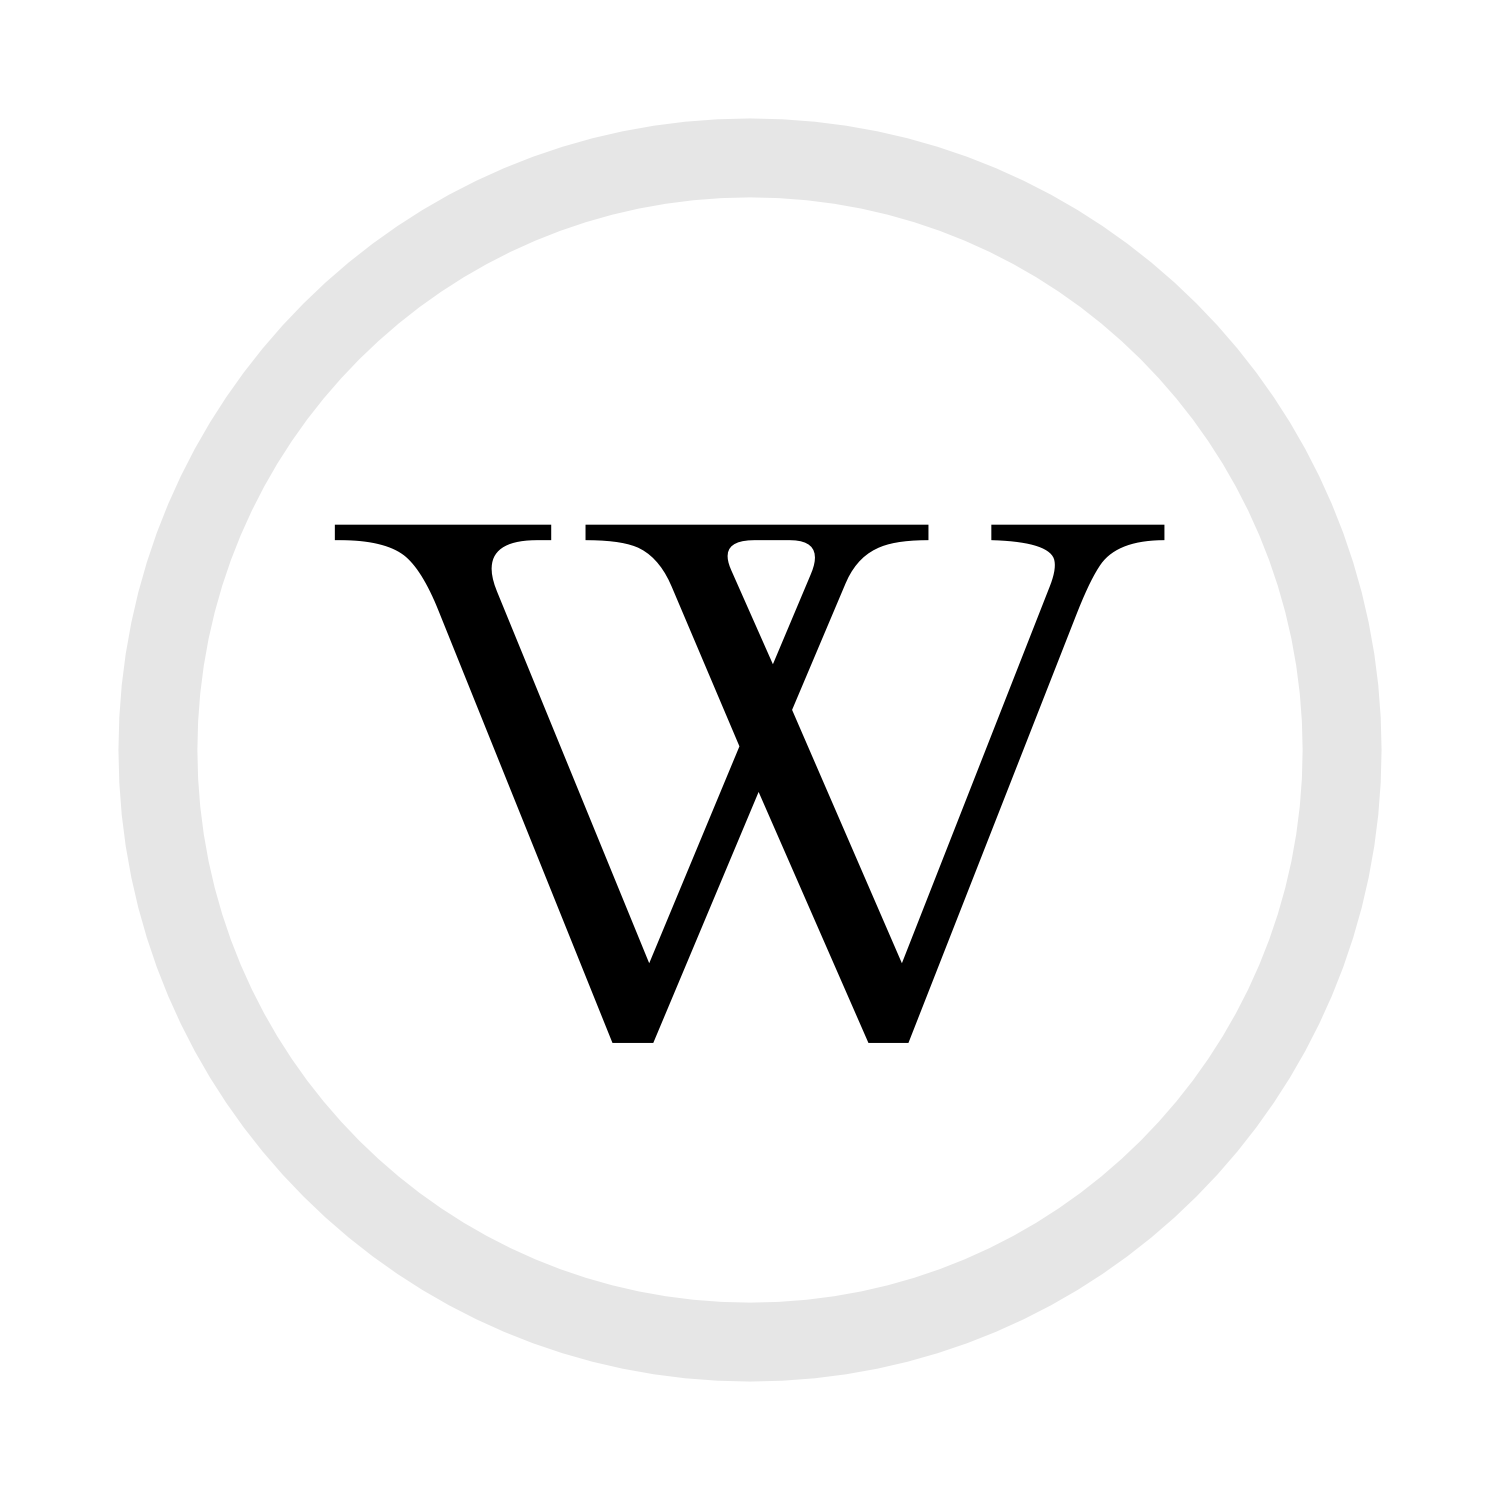 W in Circle Logo - Restren:W in circle.png